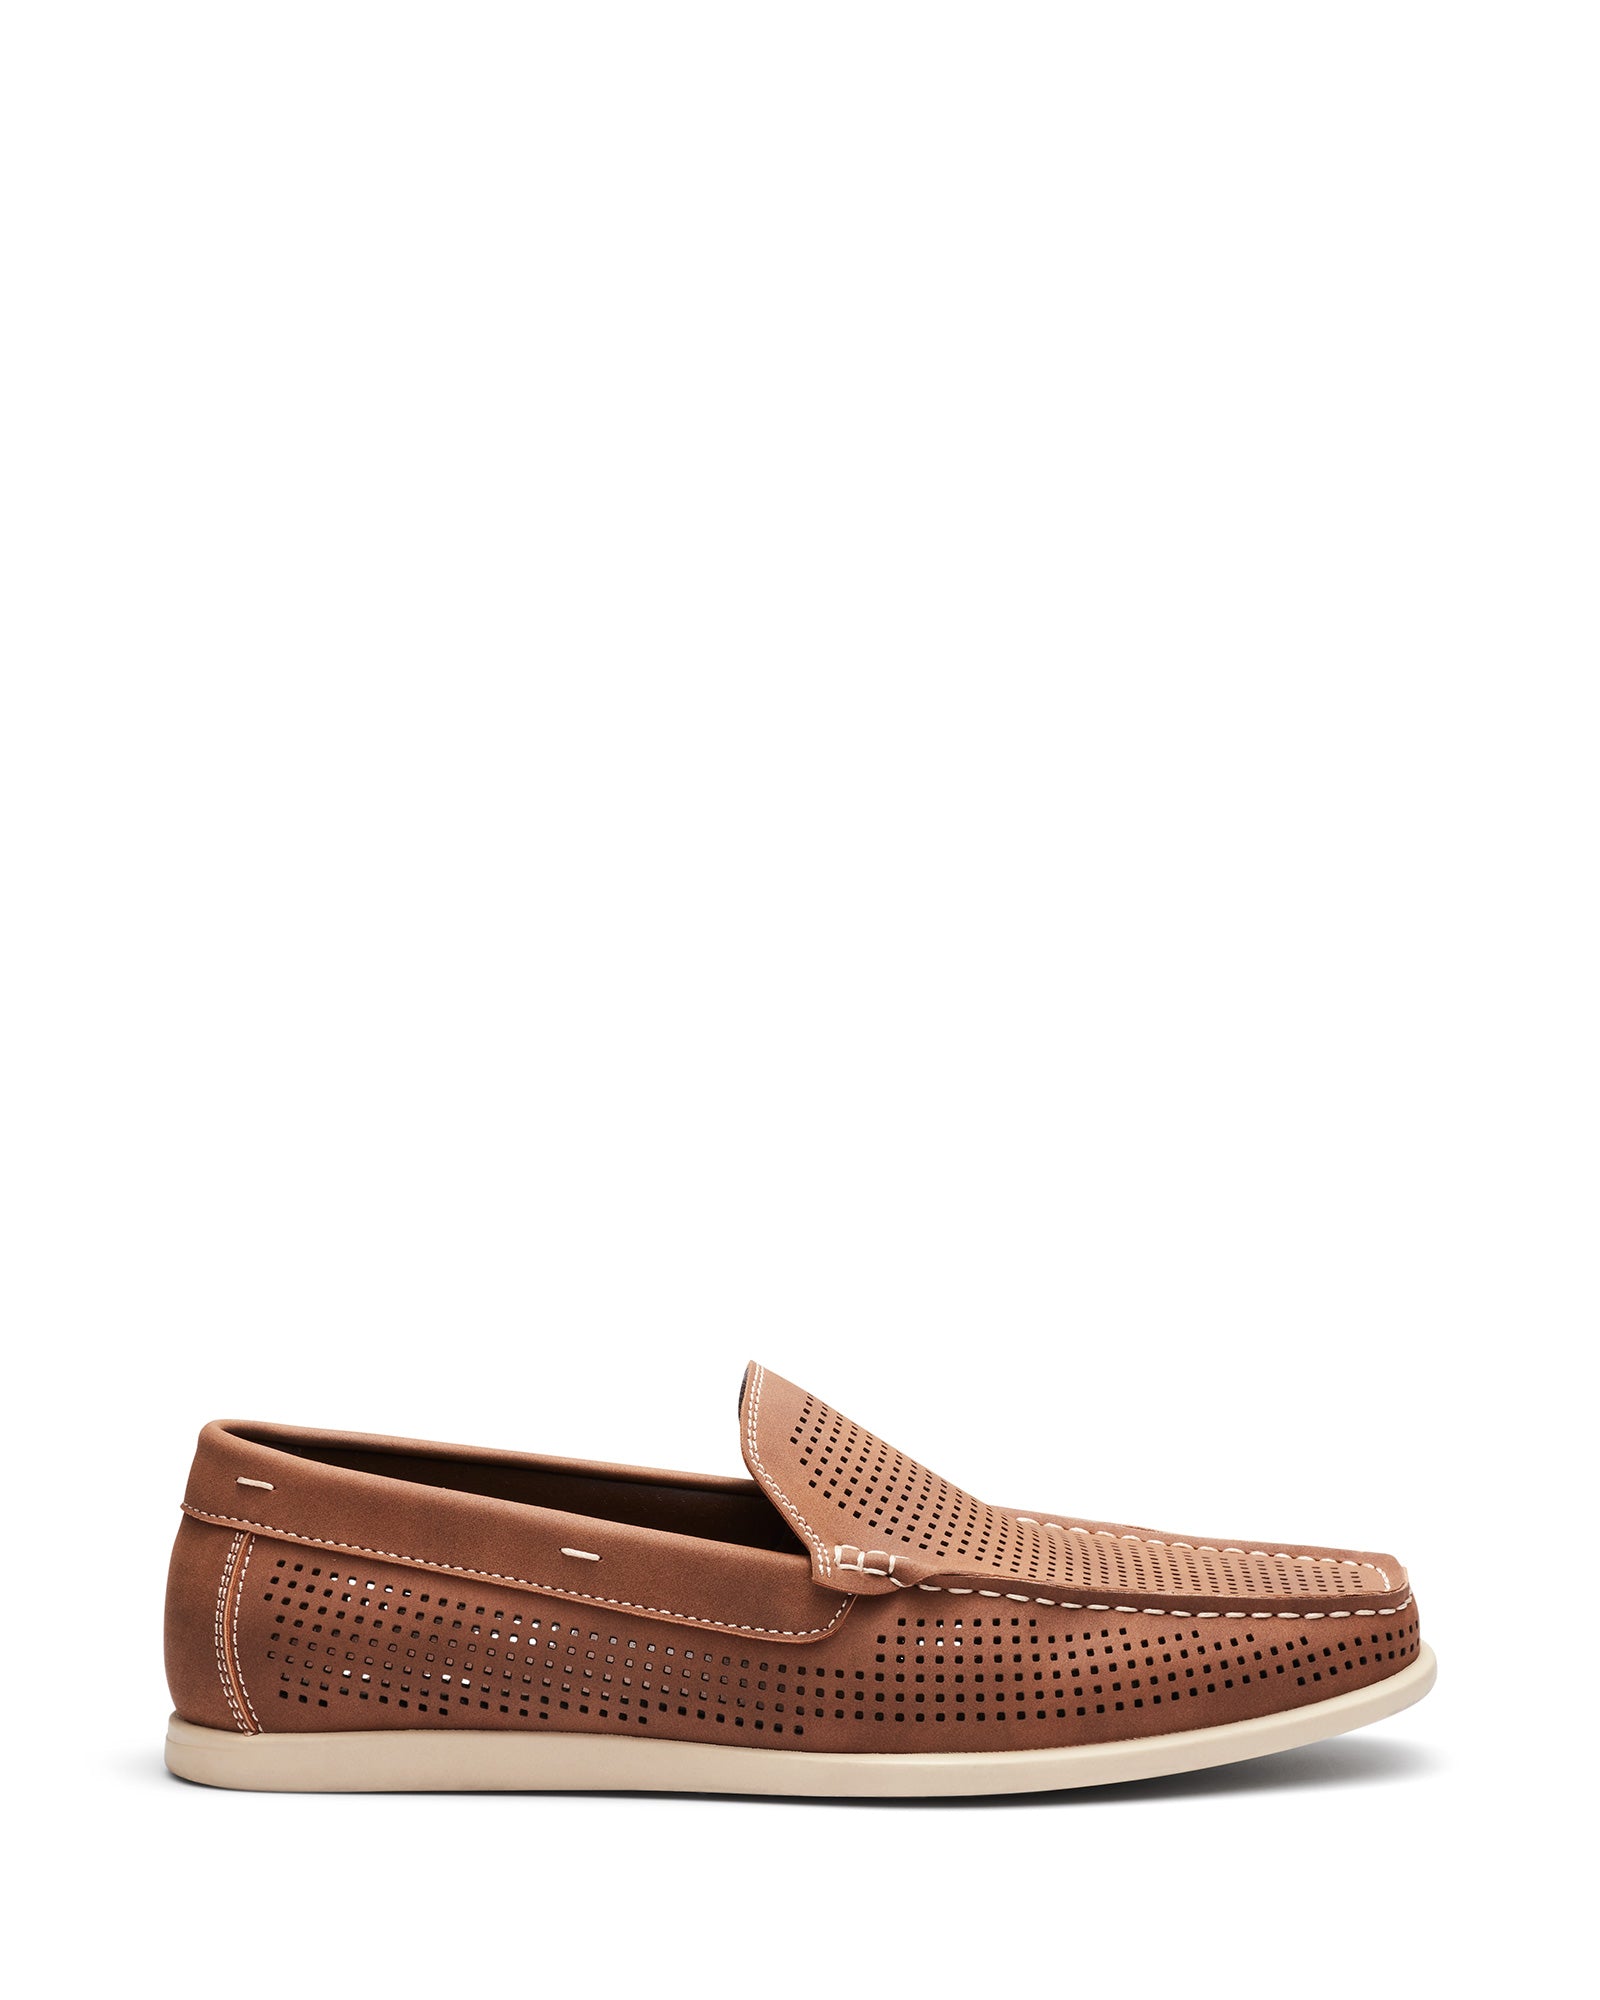 Uncut Shoes Havanna Tan | Men's Boat Shoe | Loafer | Slip On 